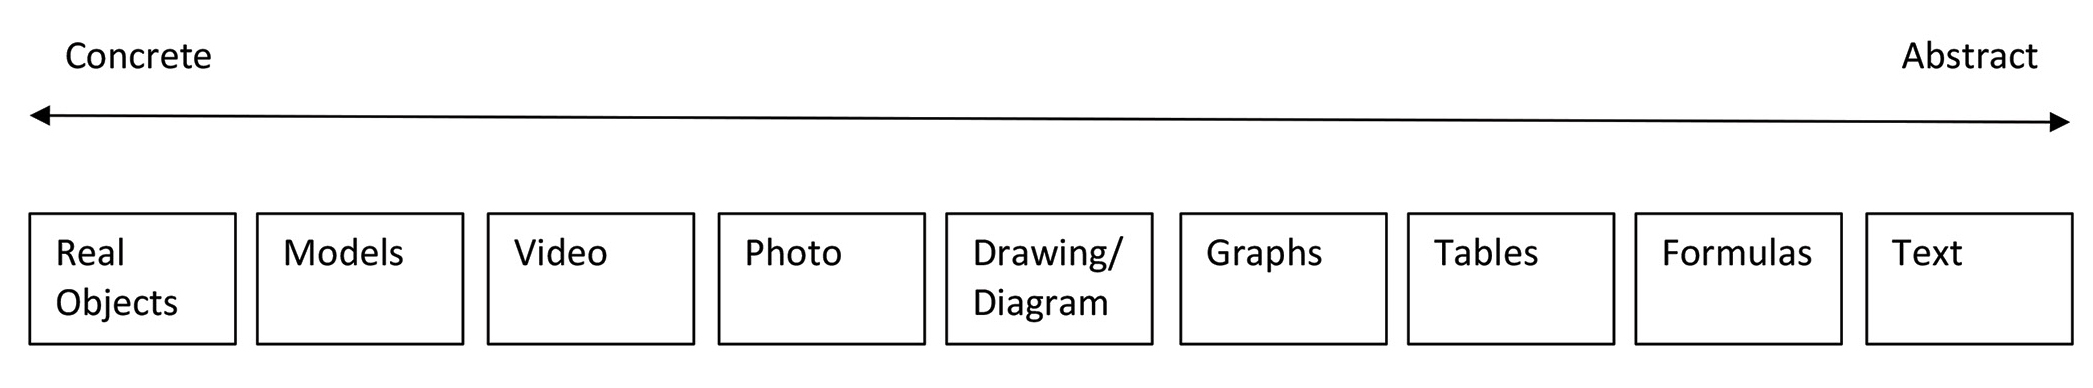 Visual science representation continuum (Olson 2013).